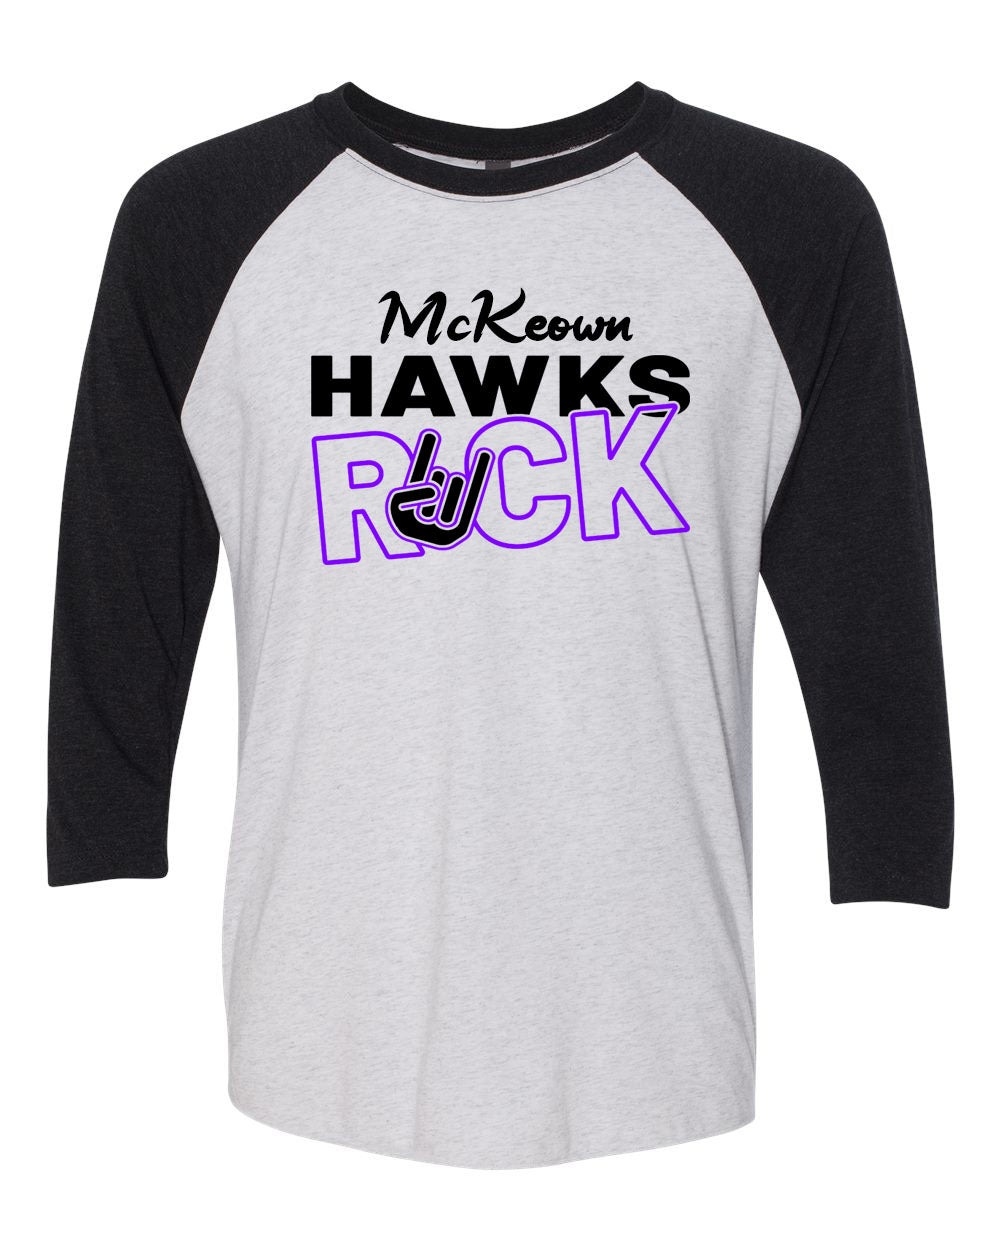 McKeown Hawks Rock Raglan shirt